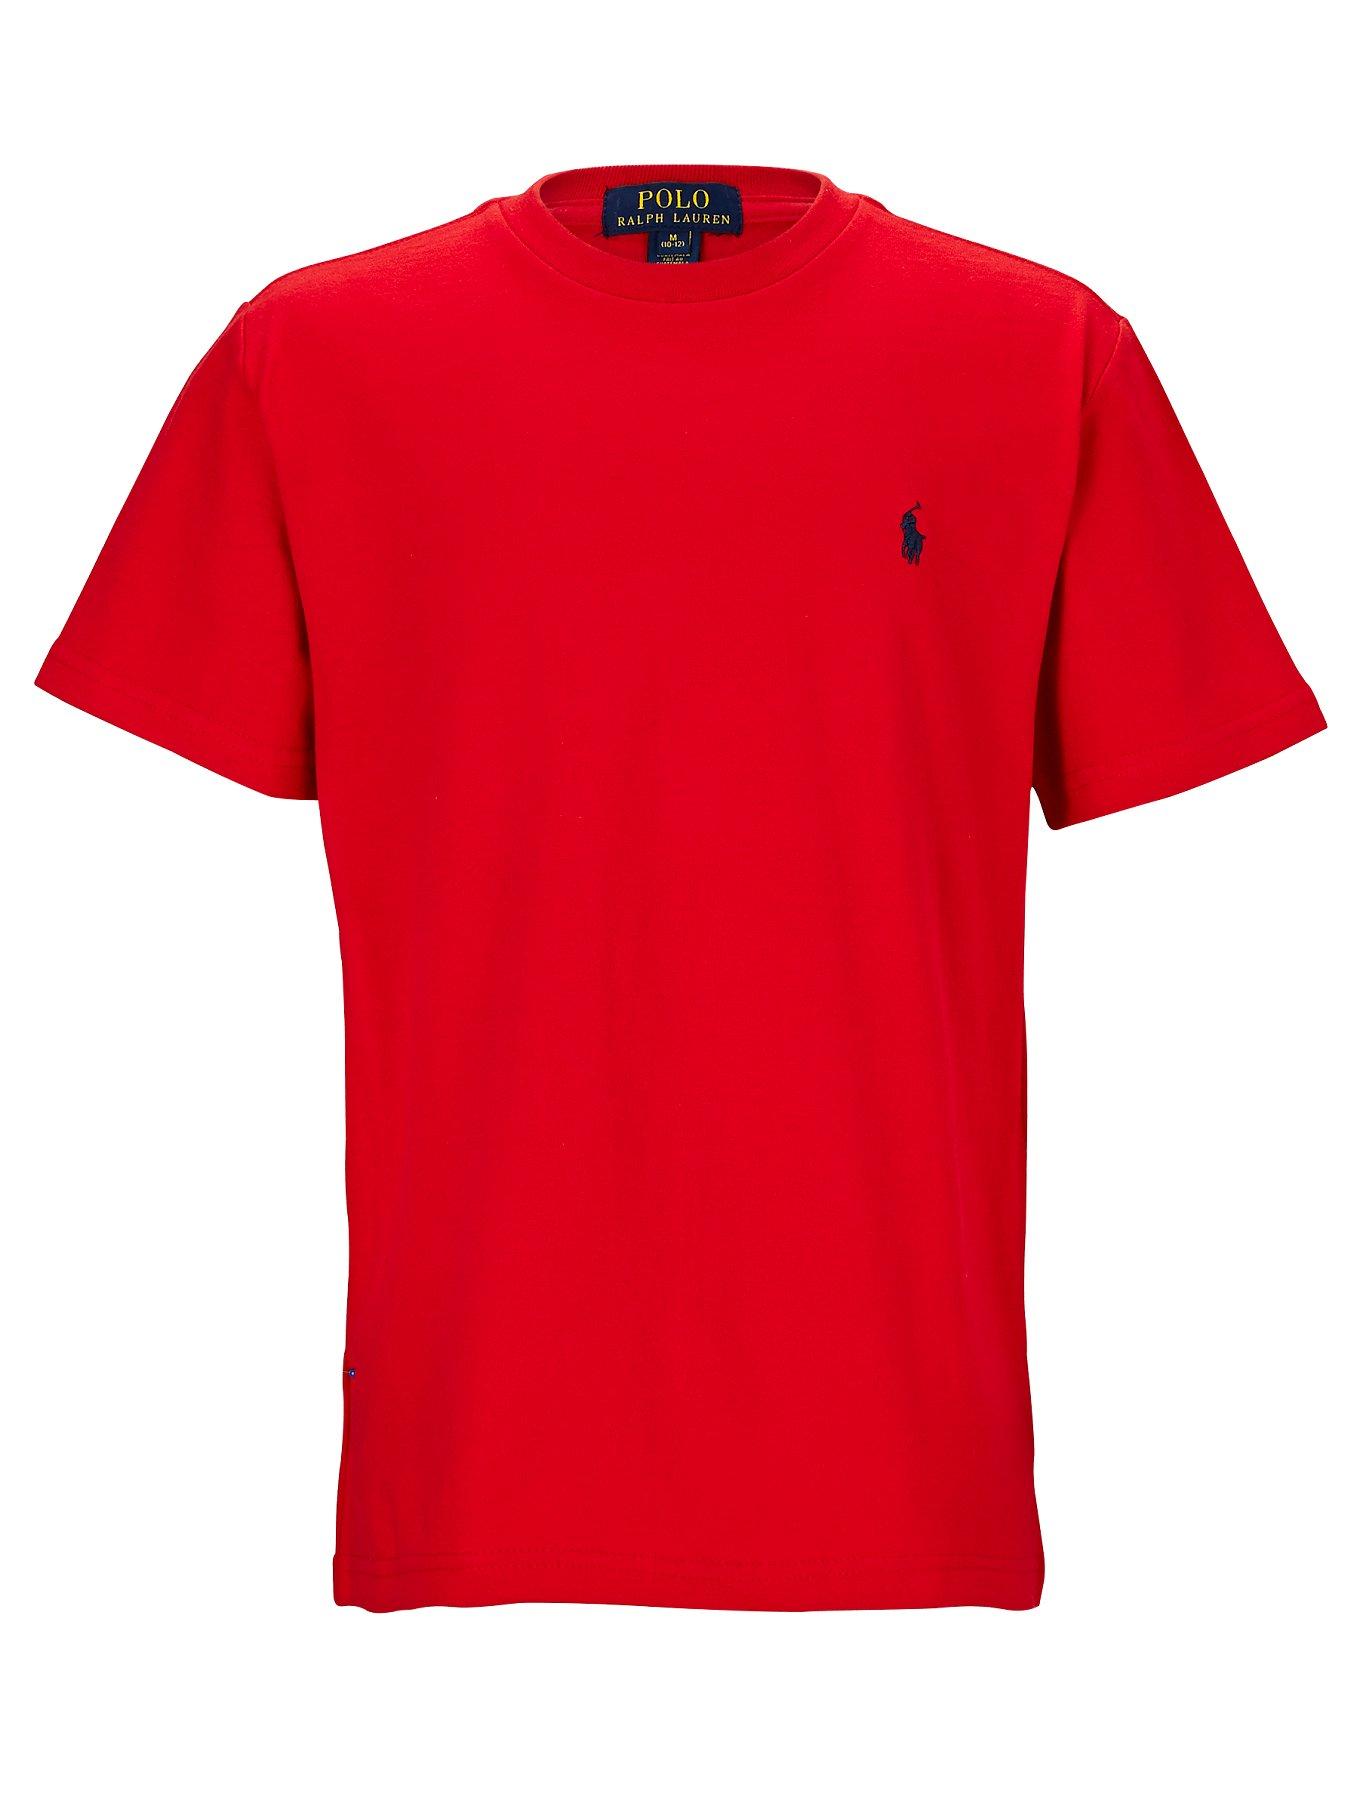 TOMMY HILFIGER Mens Red Short Sleeve Classic T-Shirt XL